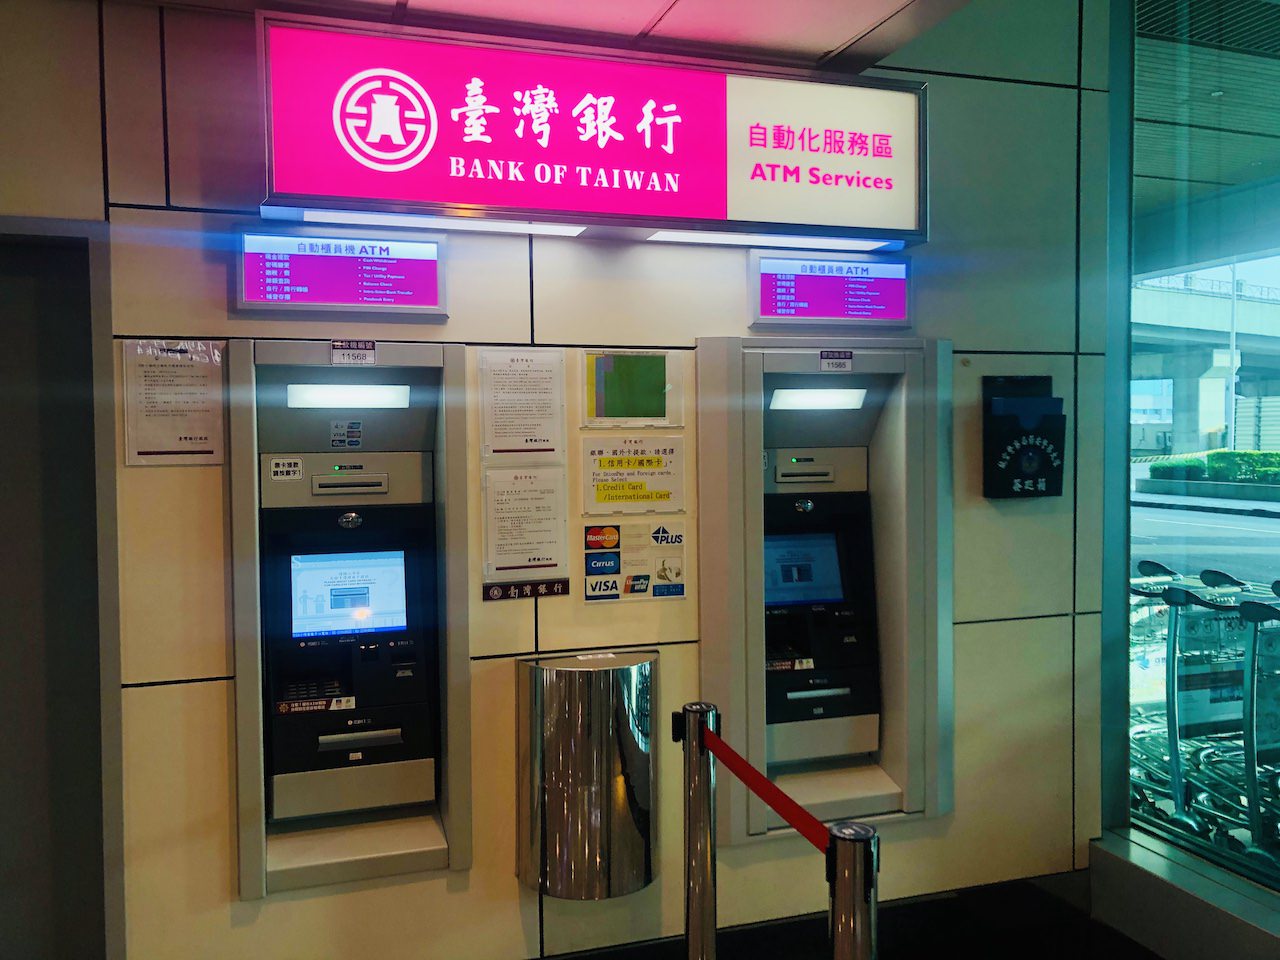 桃園空港の台湾銀行のATM